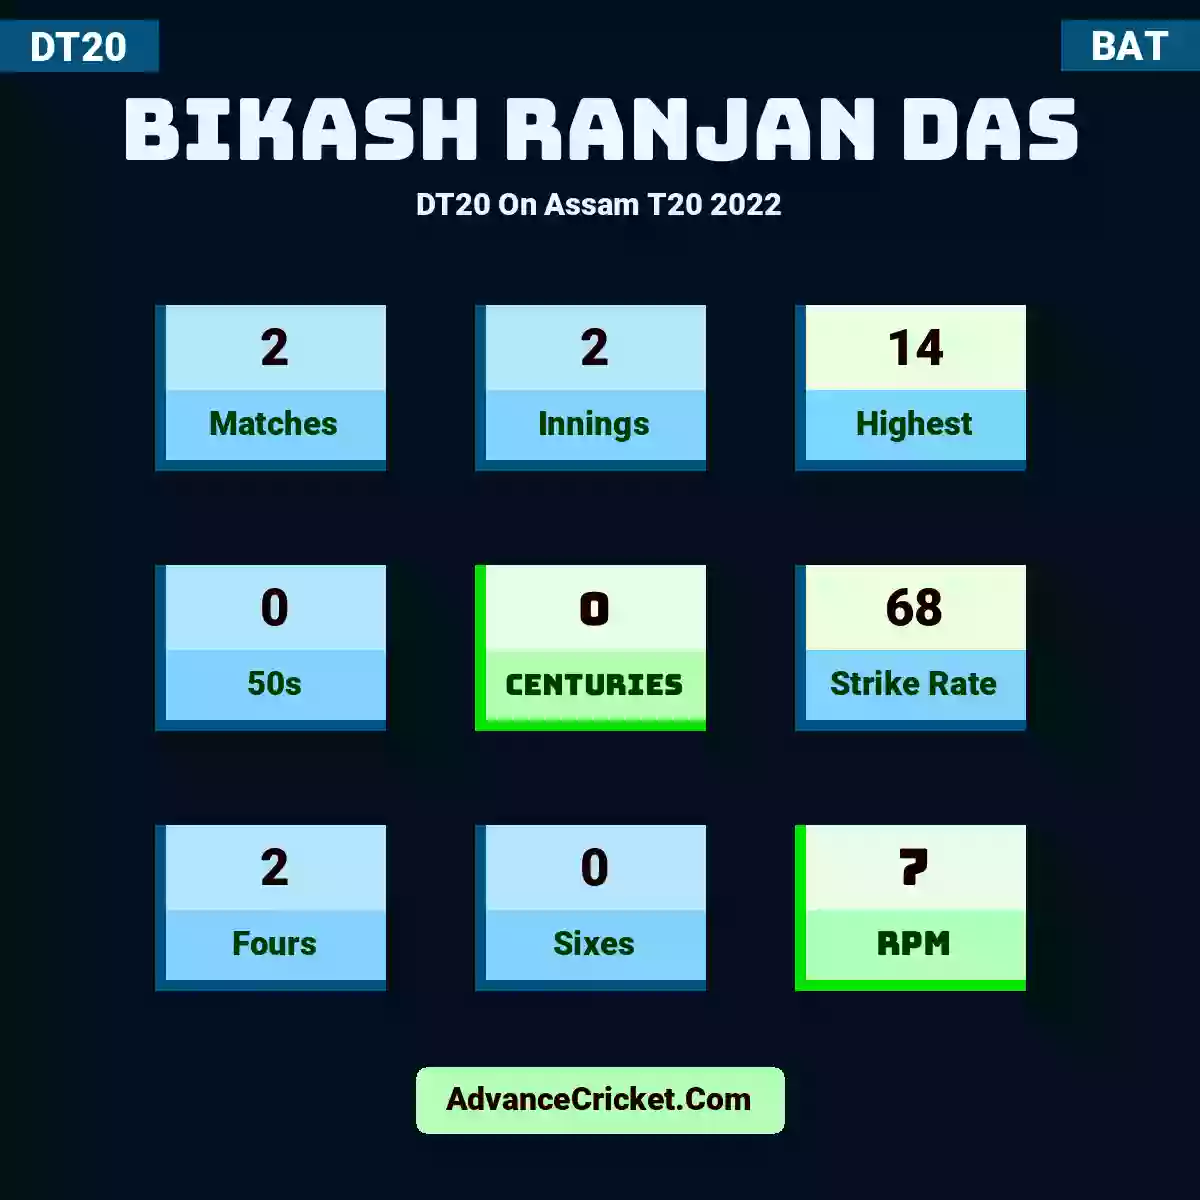 Bikash Ranjan Das DT20  On Assam T20 2022, Bikash Ranjan Das played 2 matches, scored 14 runs as highest, 0 half-centuries, and 0 centuries, with a strike rate of 68. b.ranjan.das hit 2 fours and 0 sixes, with an RPM of 7.